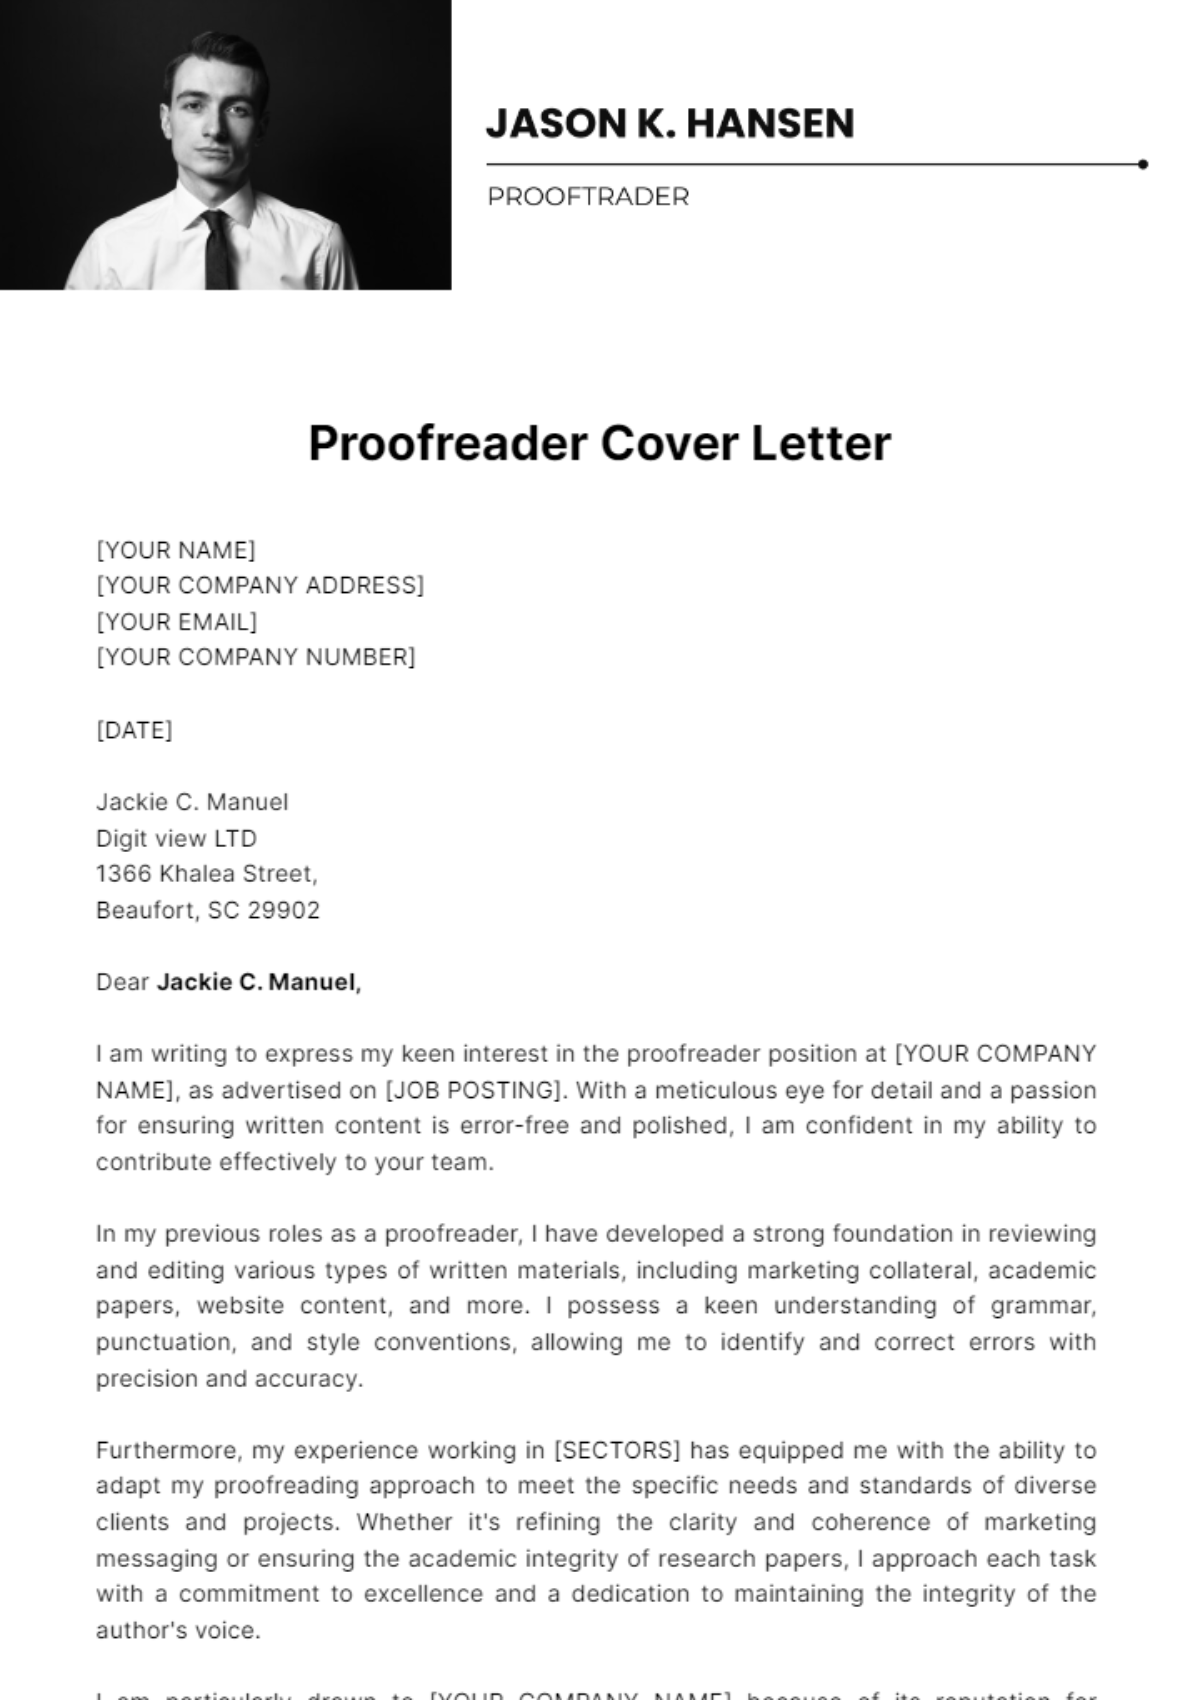 Proofreader Cover Letter Template